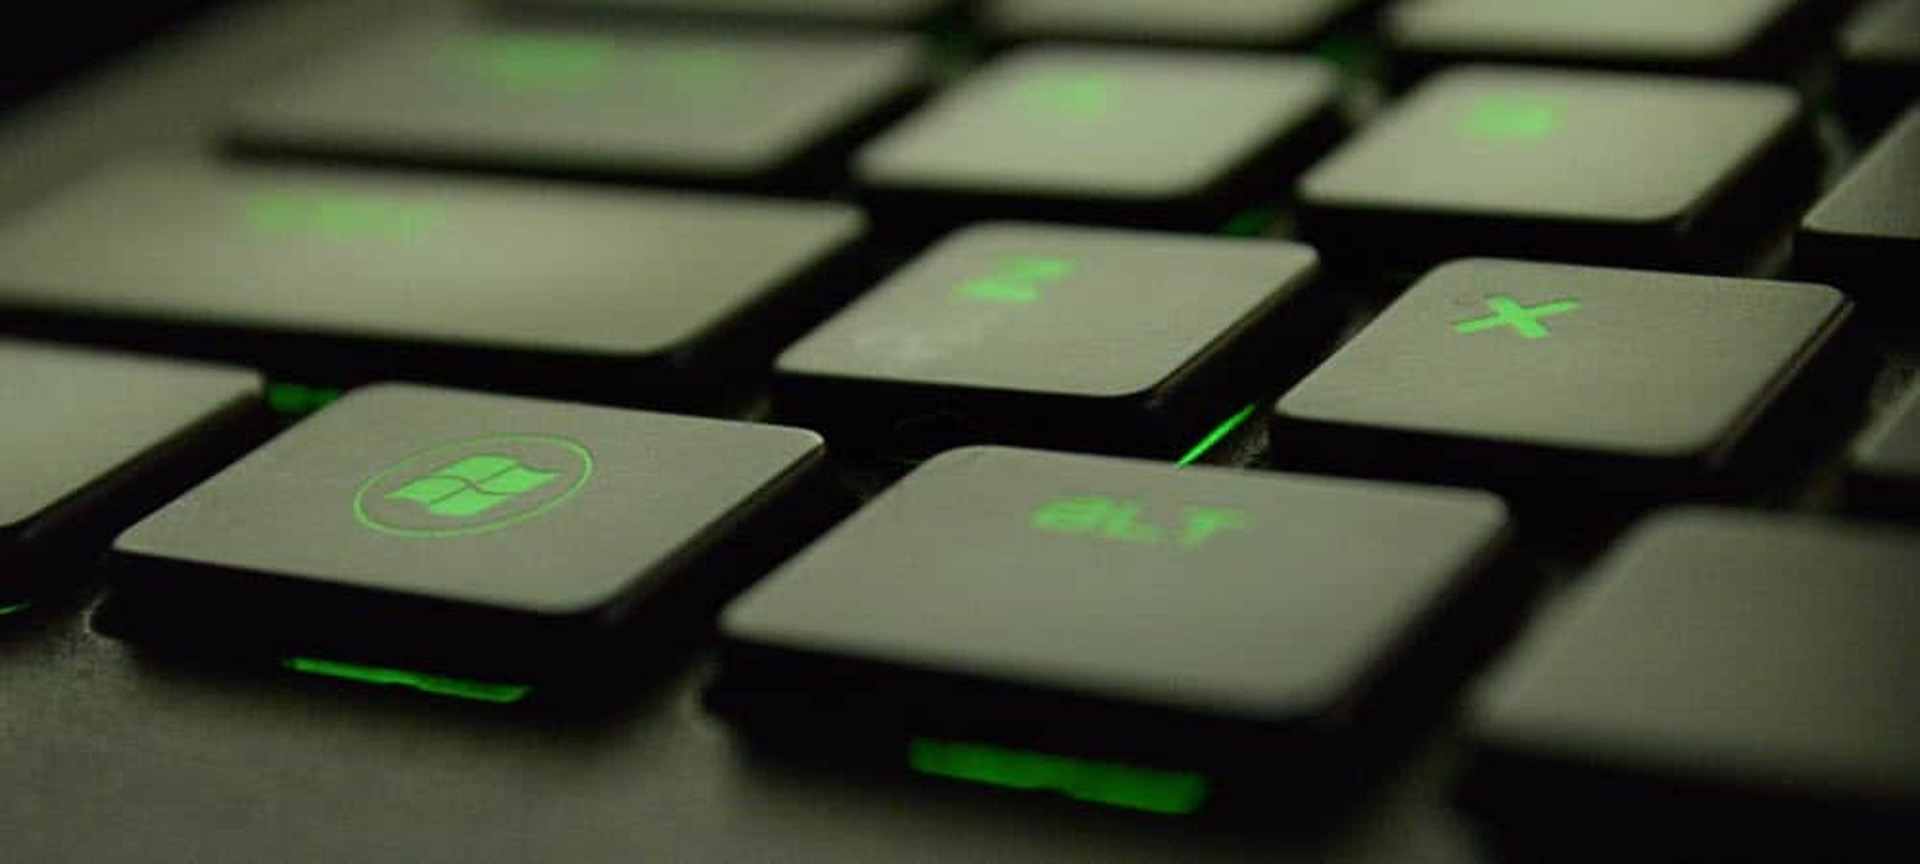 Gaming Keyboard: How To Unlock The Windows Key